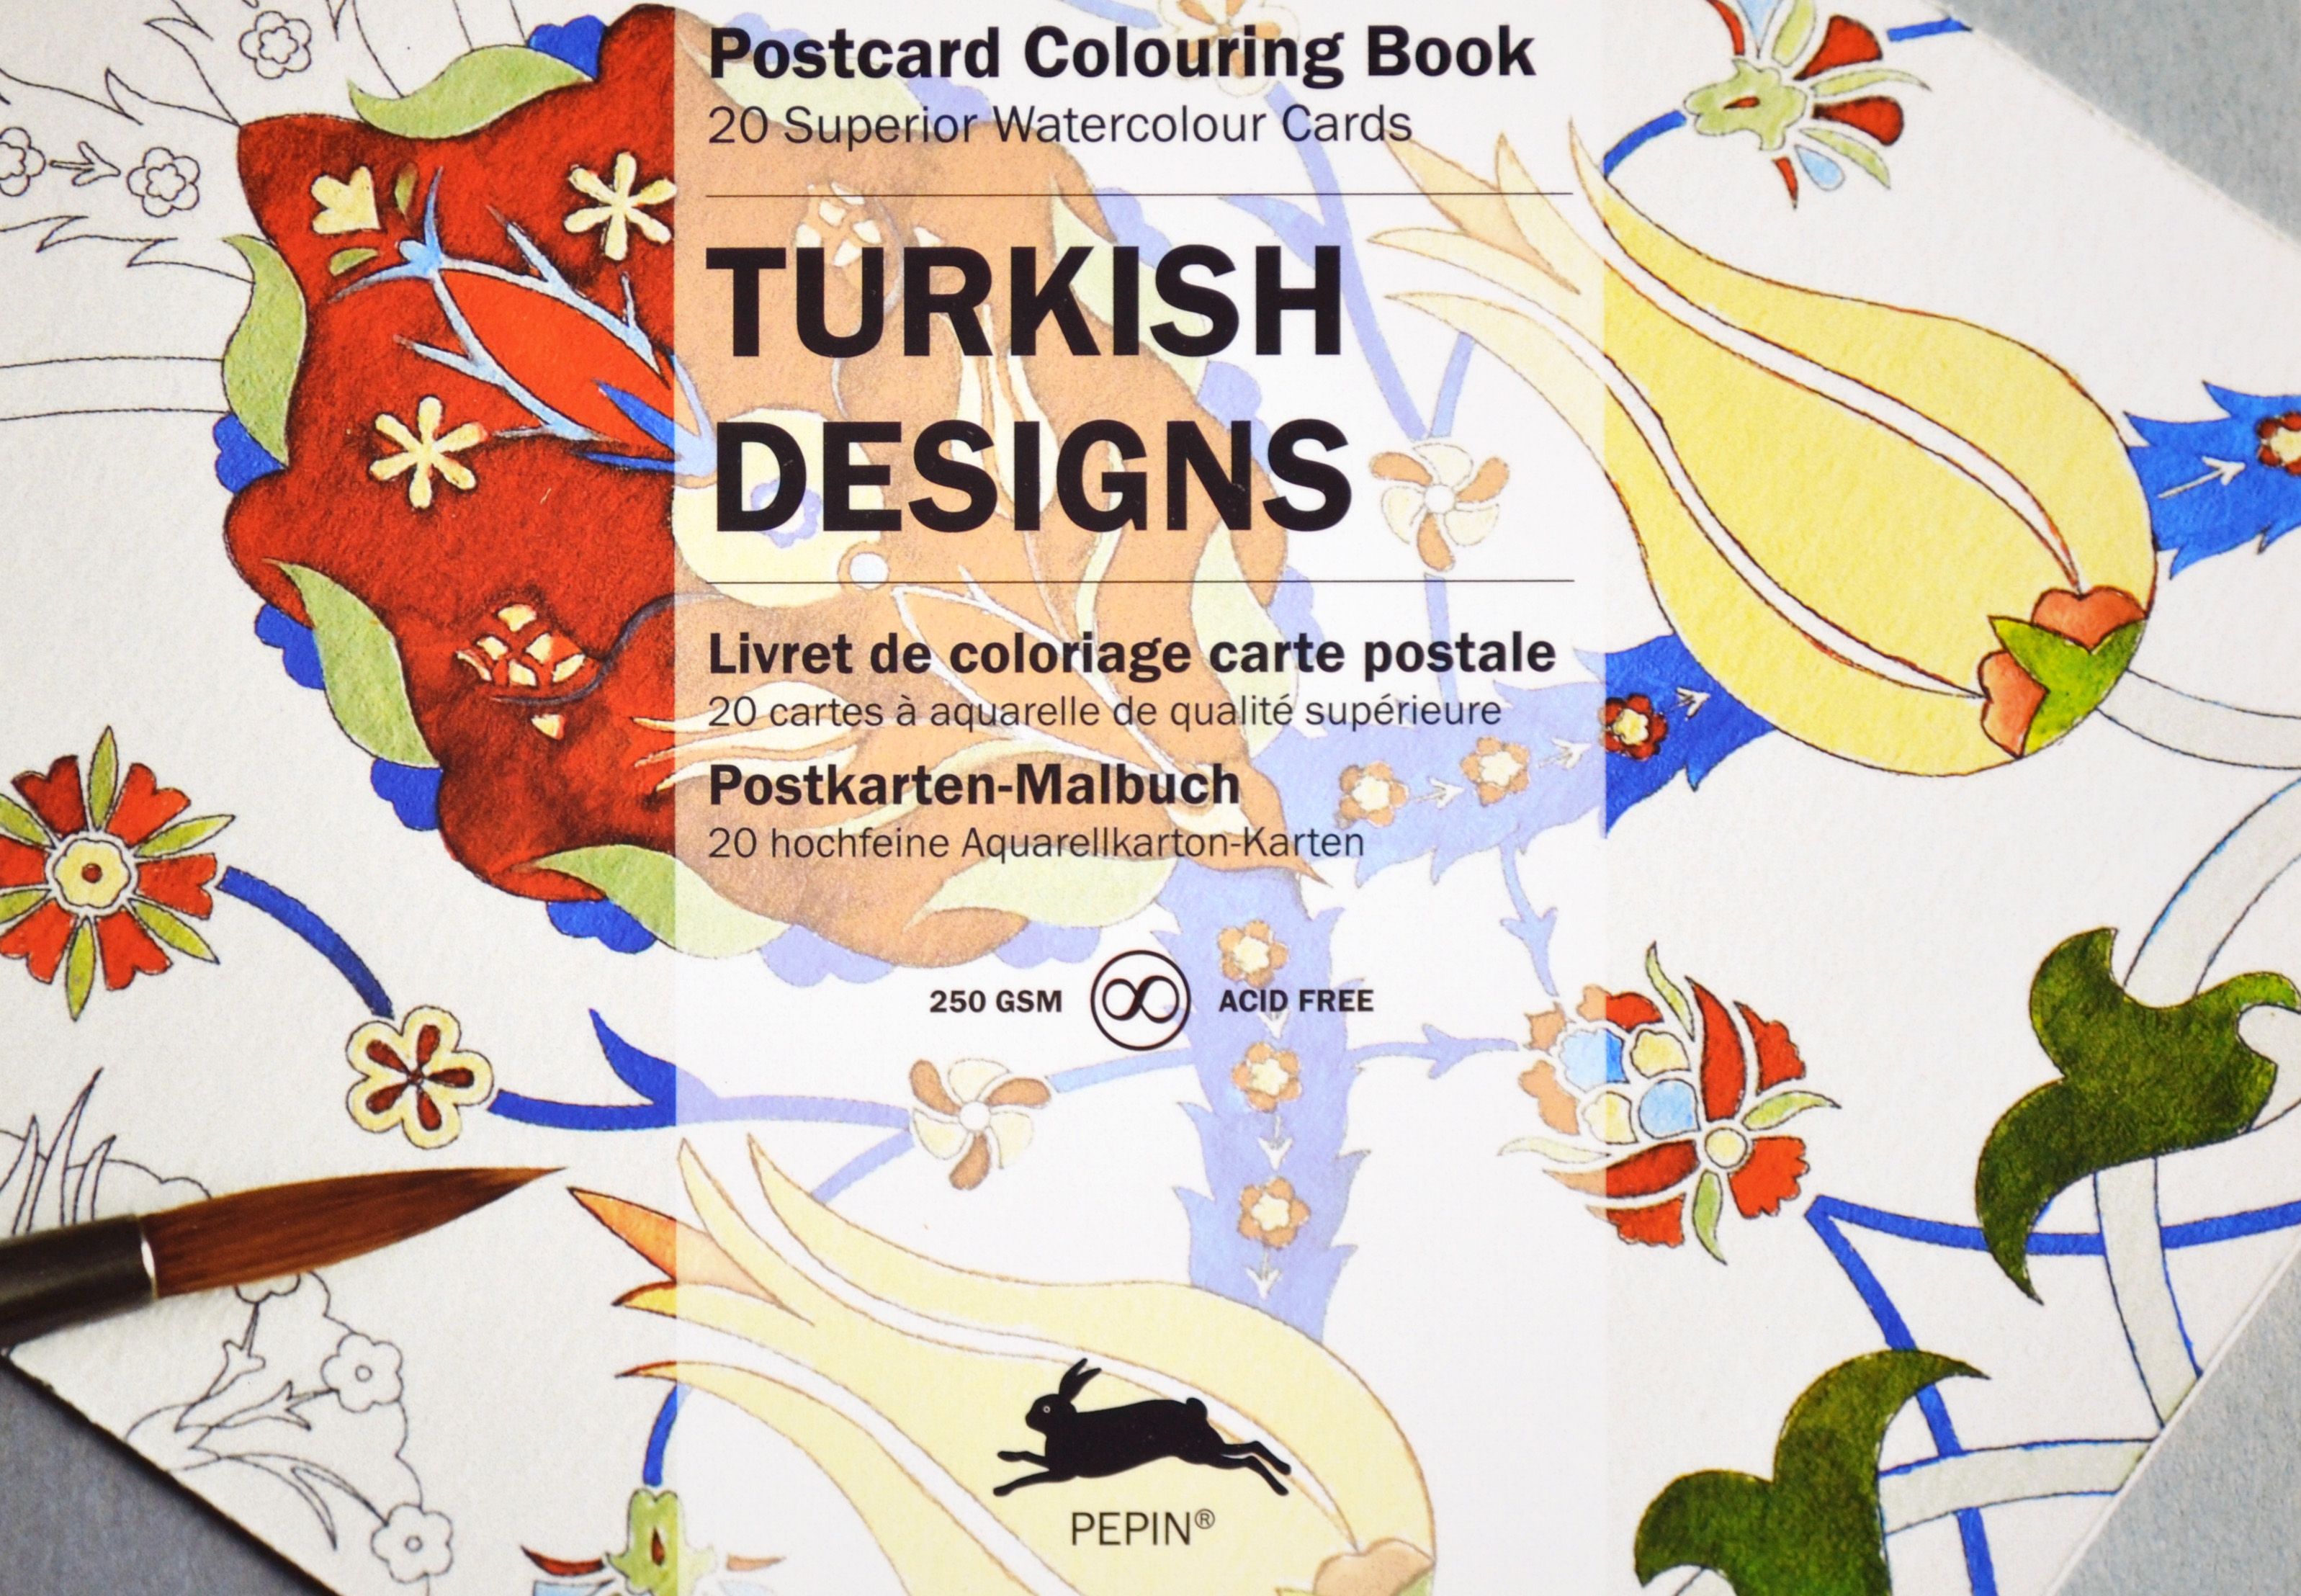 TURKISH DESIGNS: PEPIN POSTCARD COLOURING BOOK